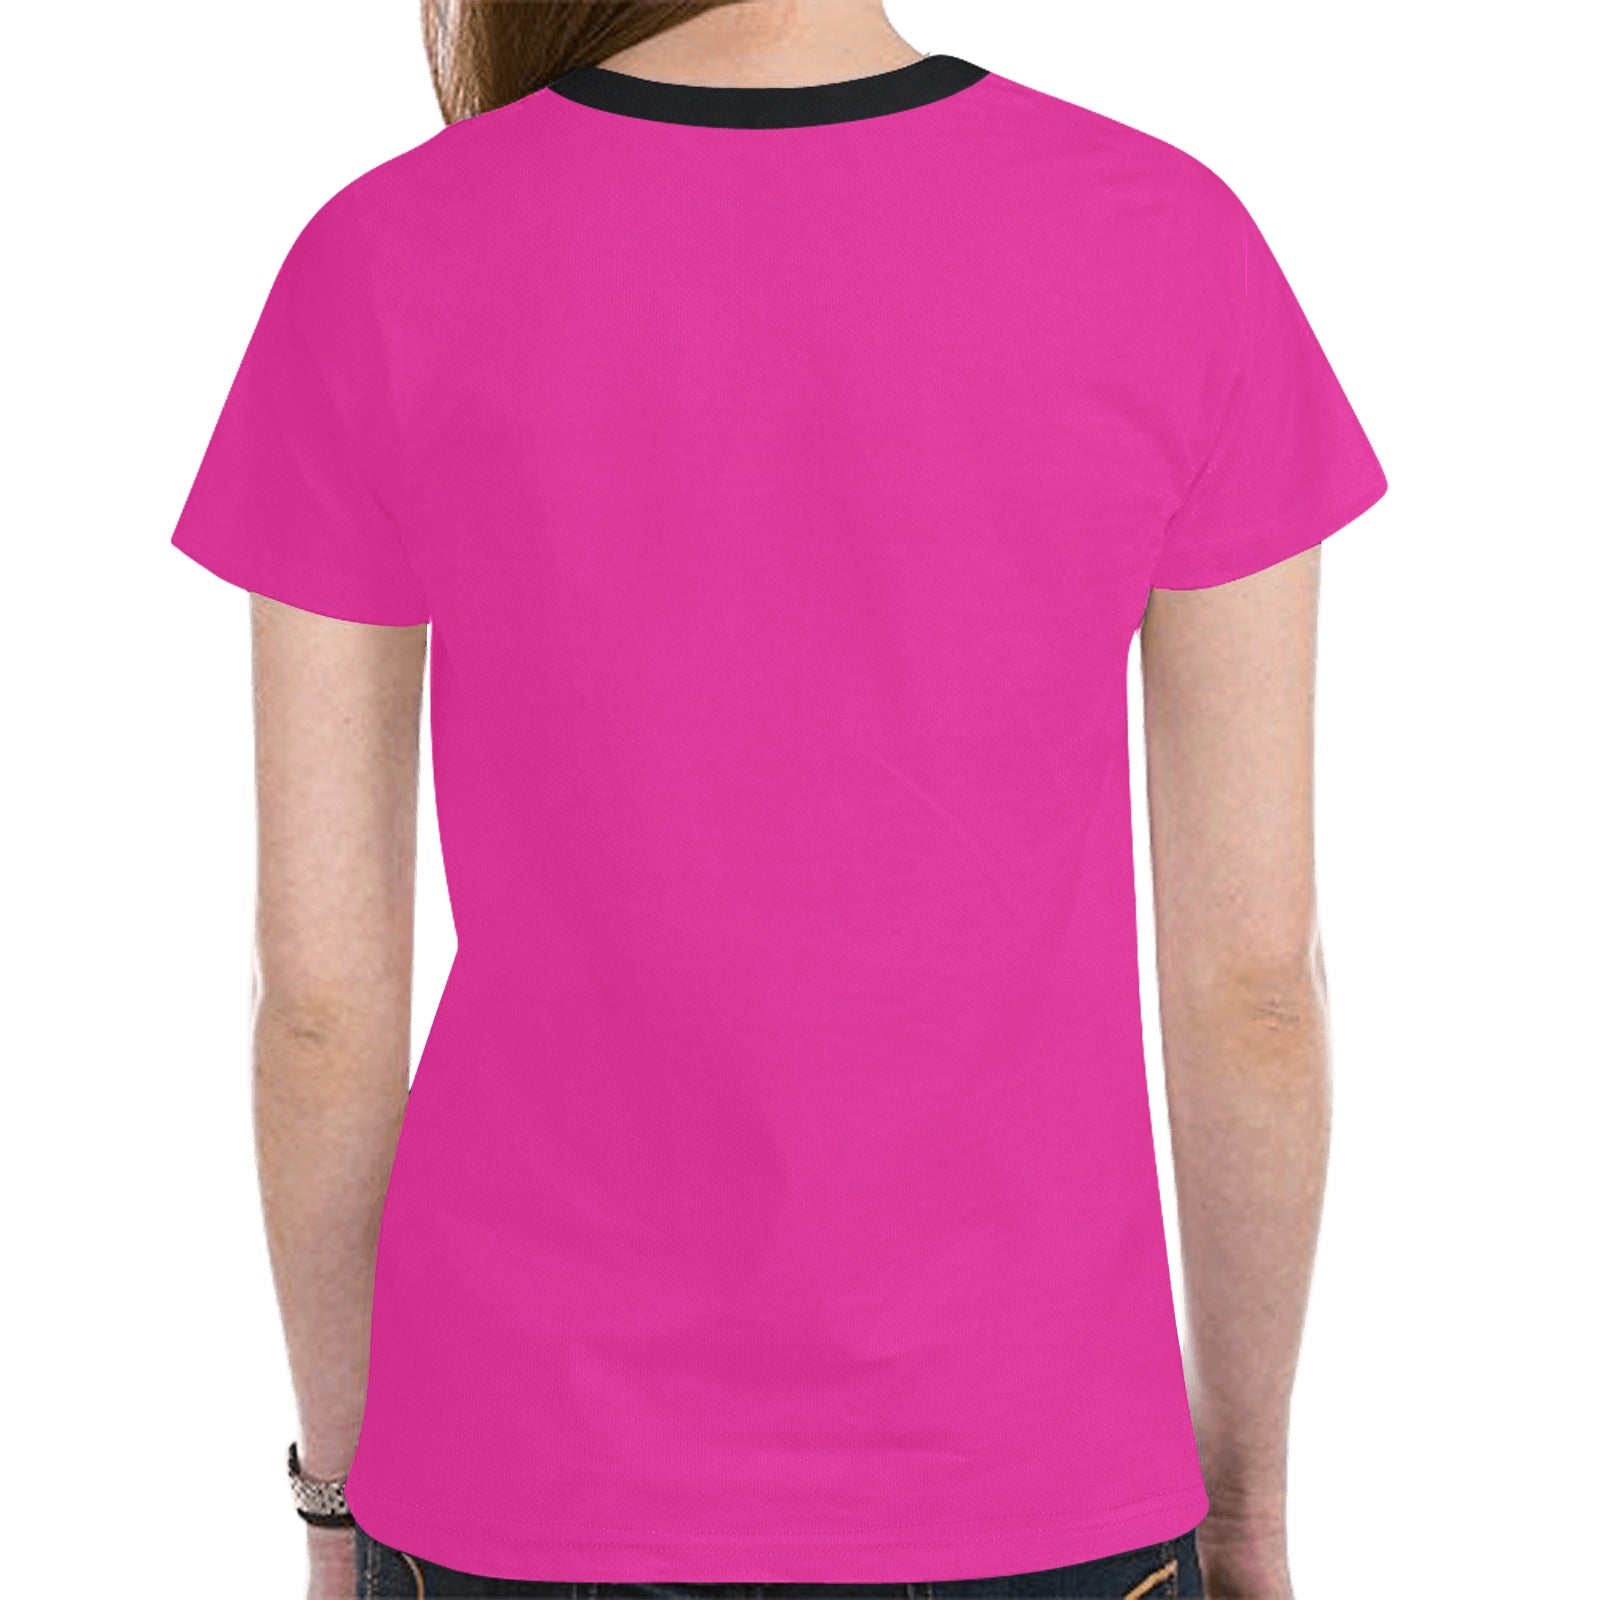 Elk Spirit Guide (Pink) T-shirt for Women